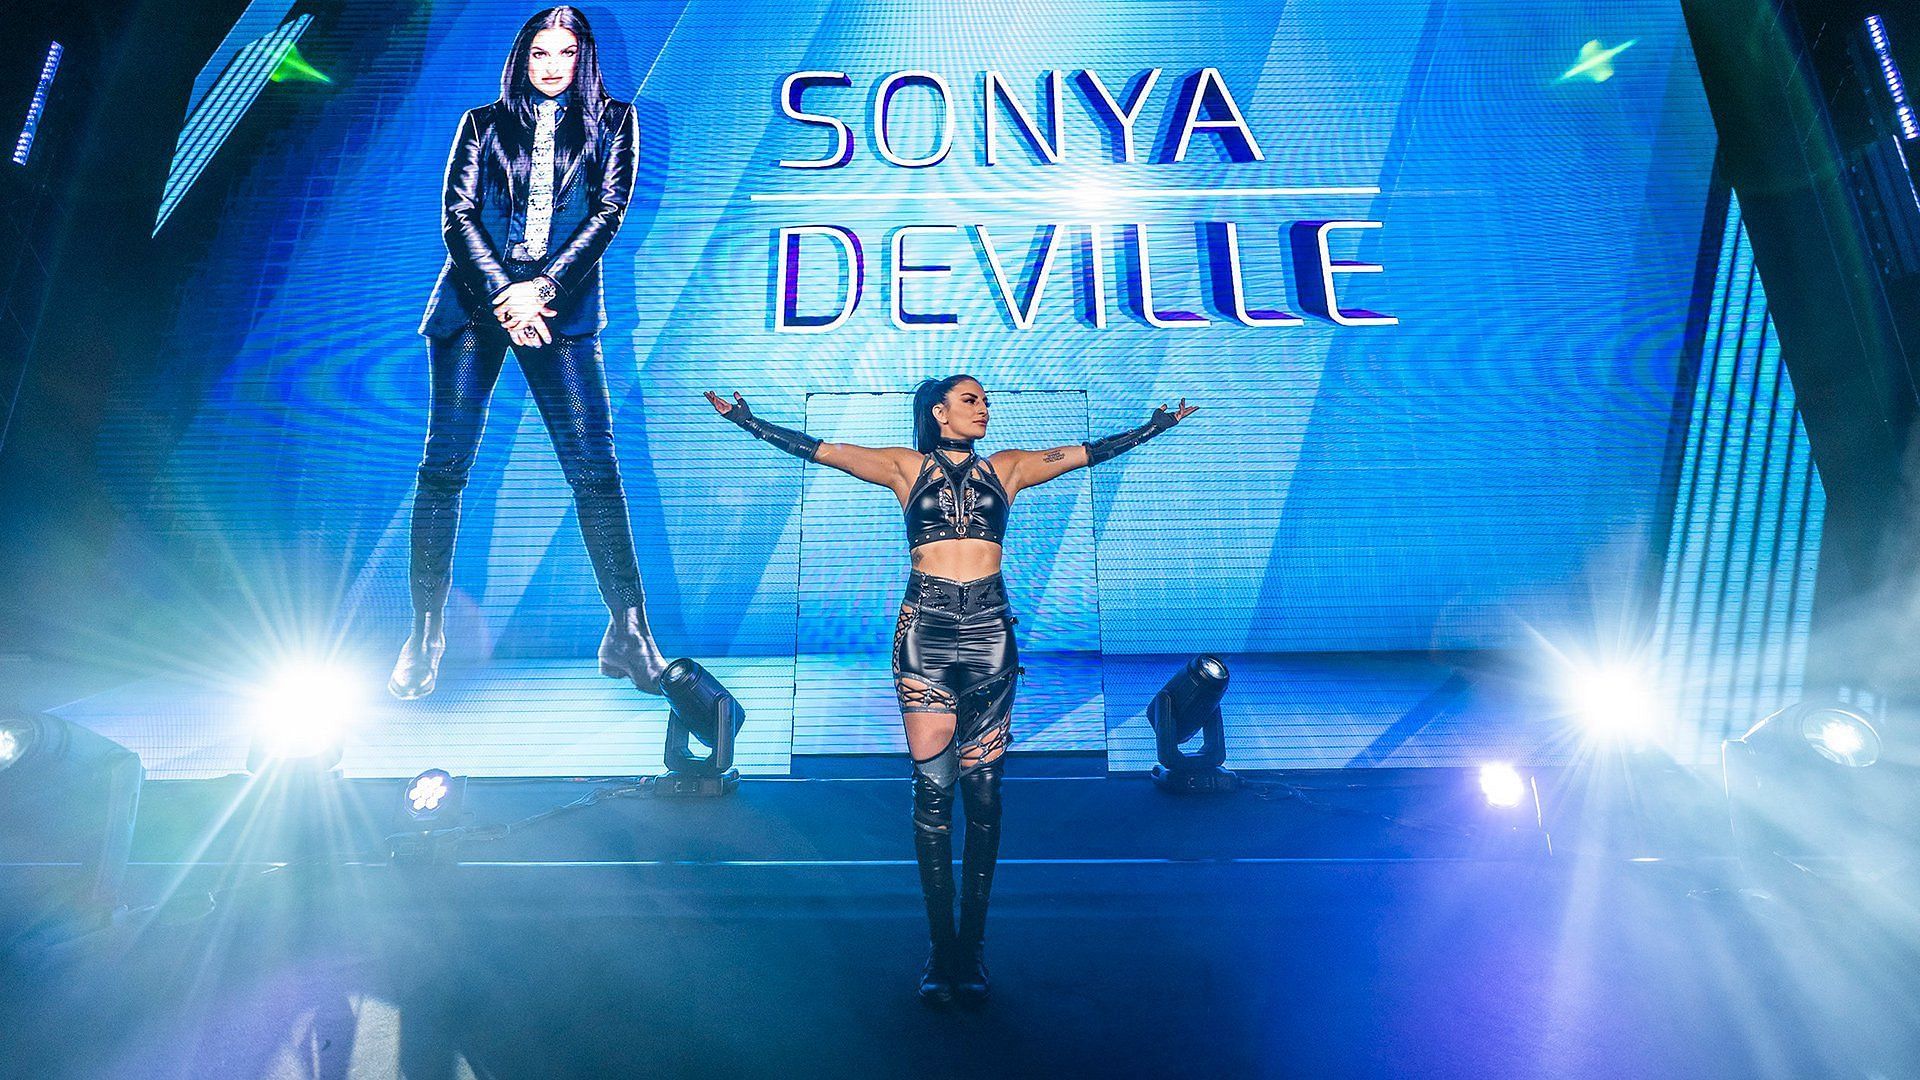 Sonya Deville